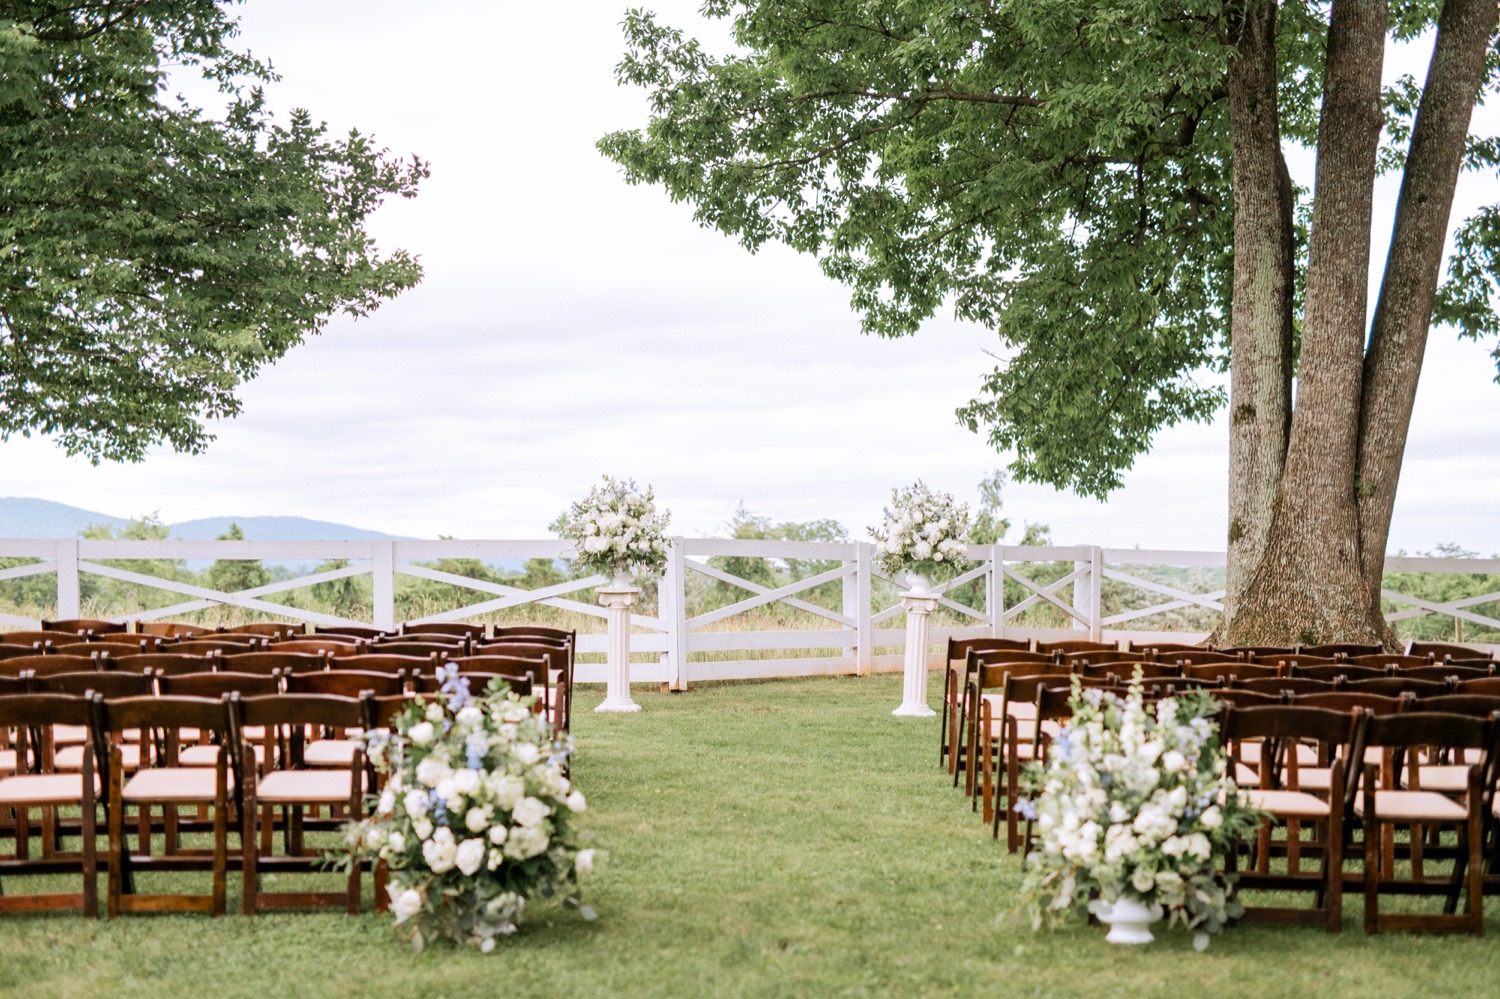 Wedding Ceremony set up at James Monroe's Highland in Charlottesville, VA